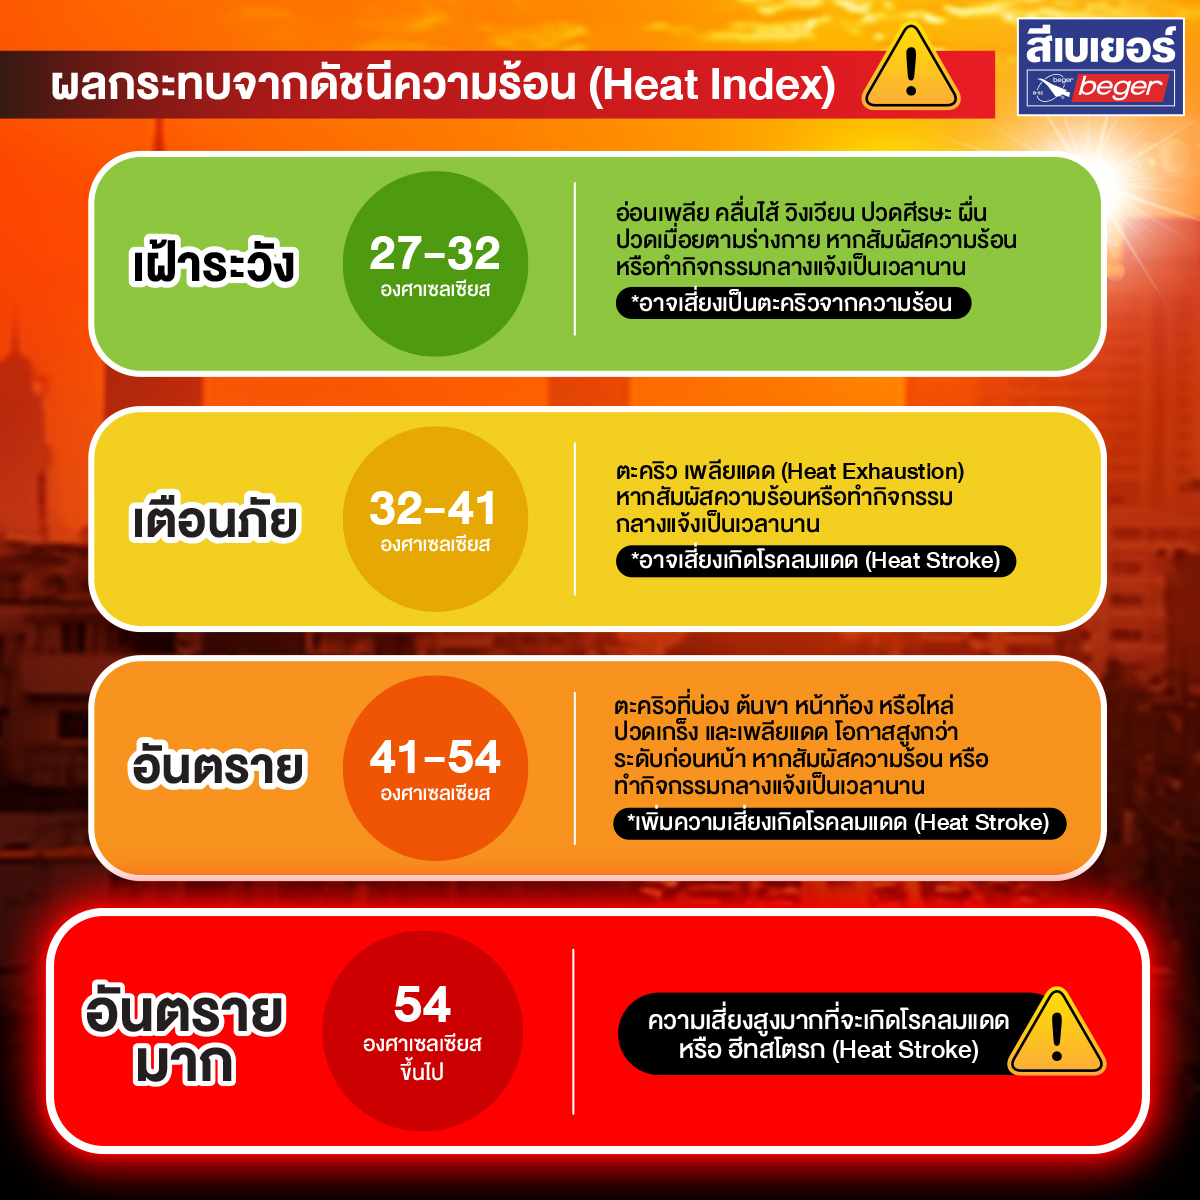 Heat index severe